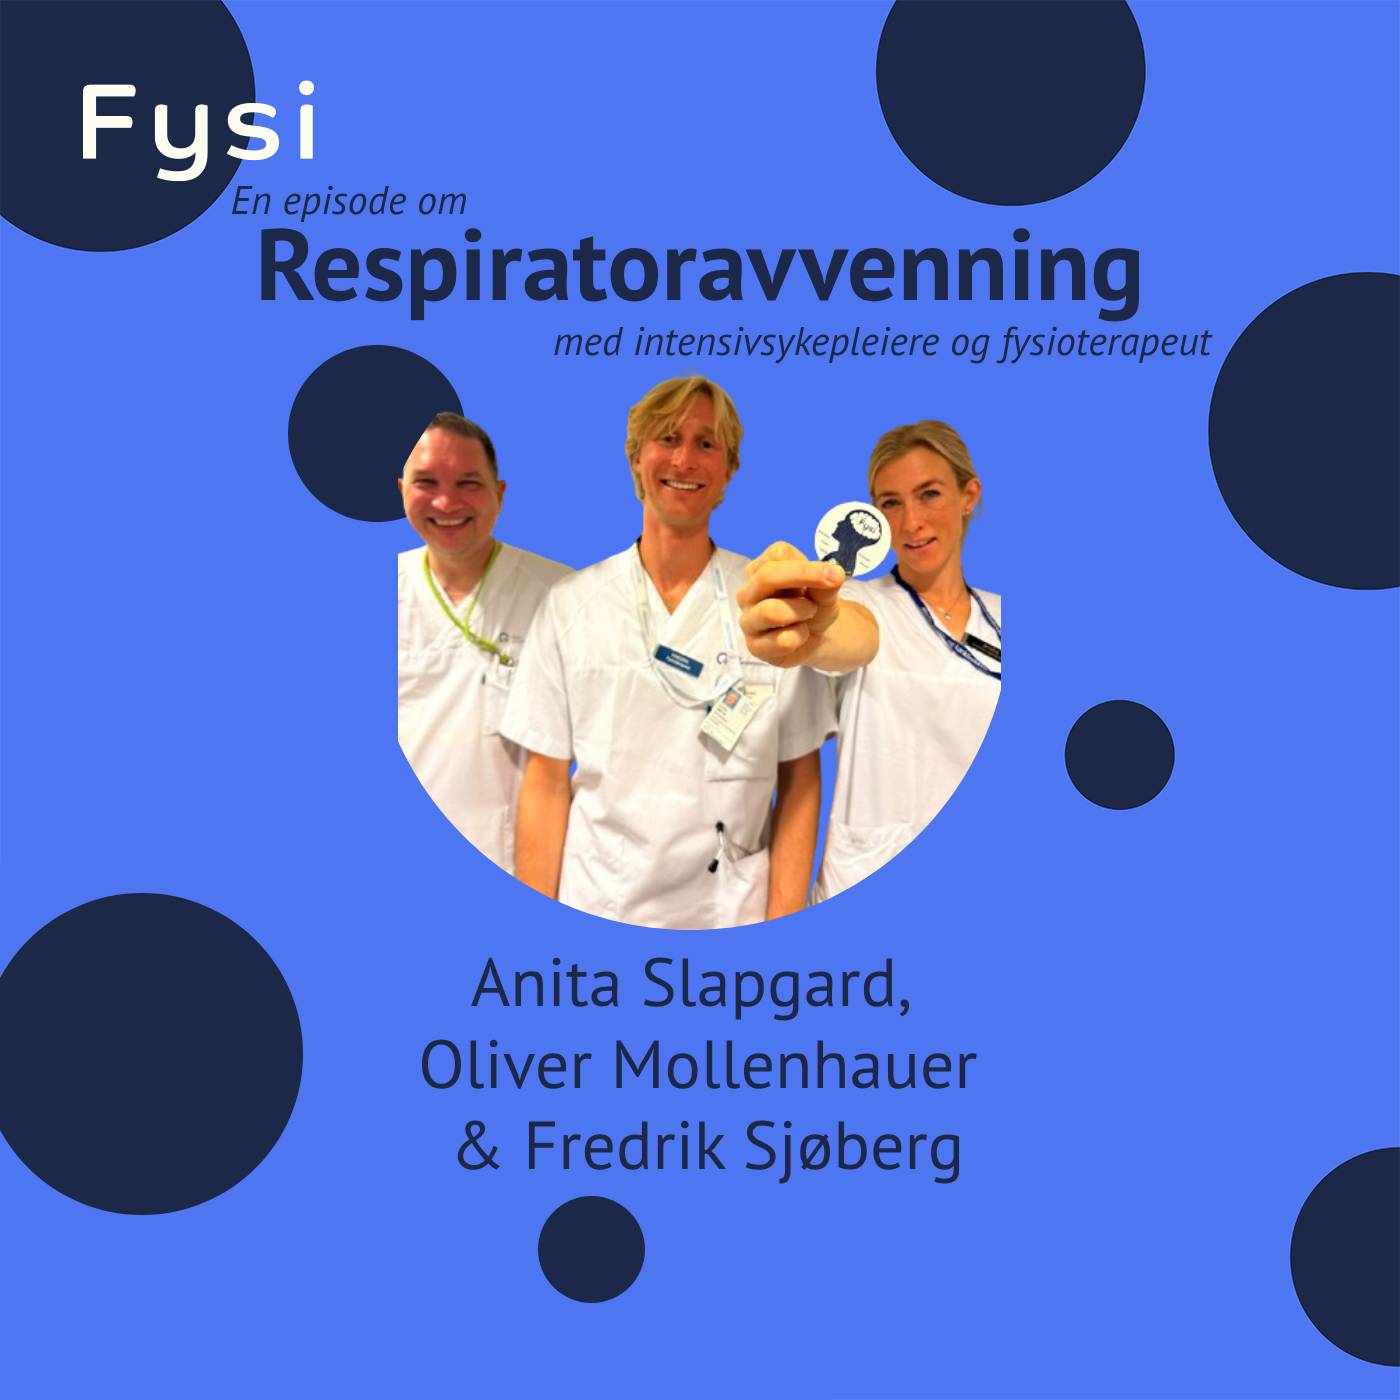 Respiratoravvenning - intensivsykepleier Anita Slapgard & Oliver Mollenhauer